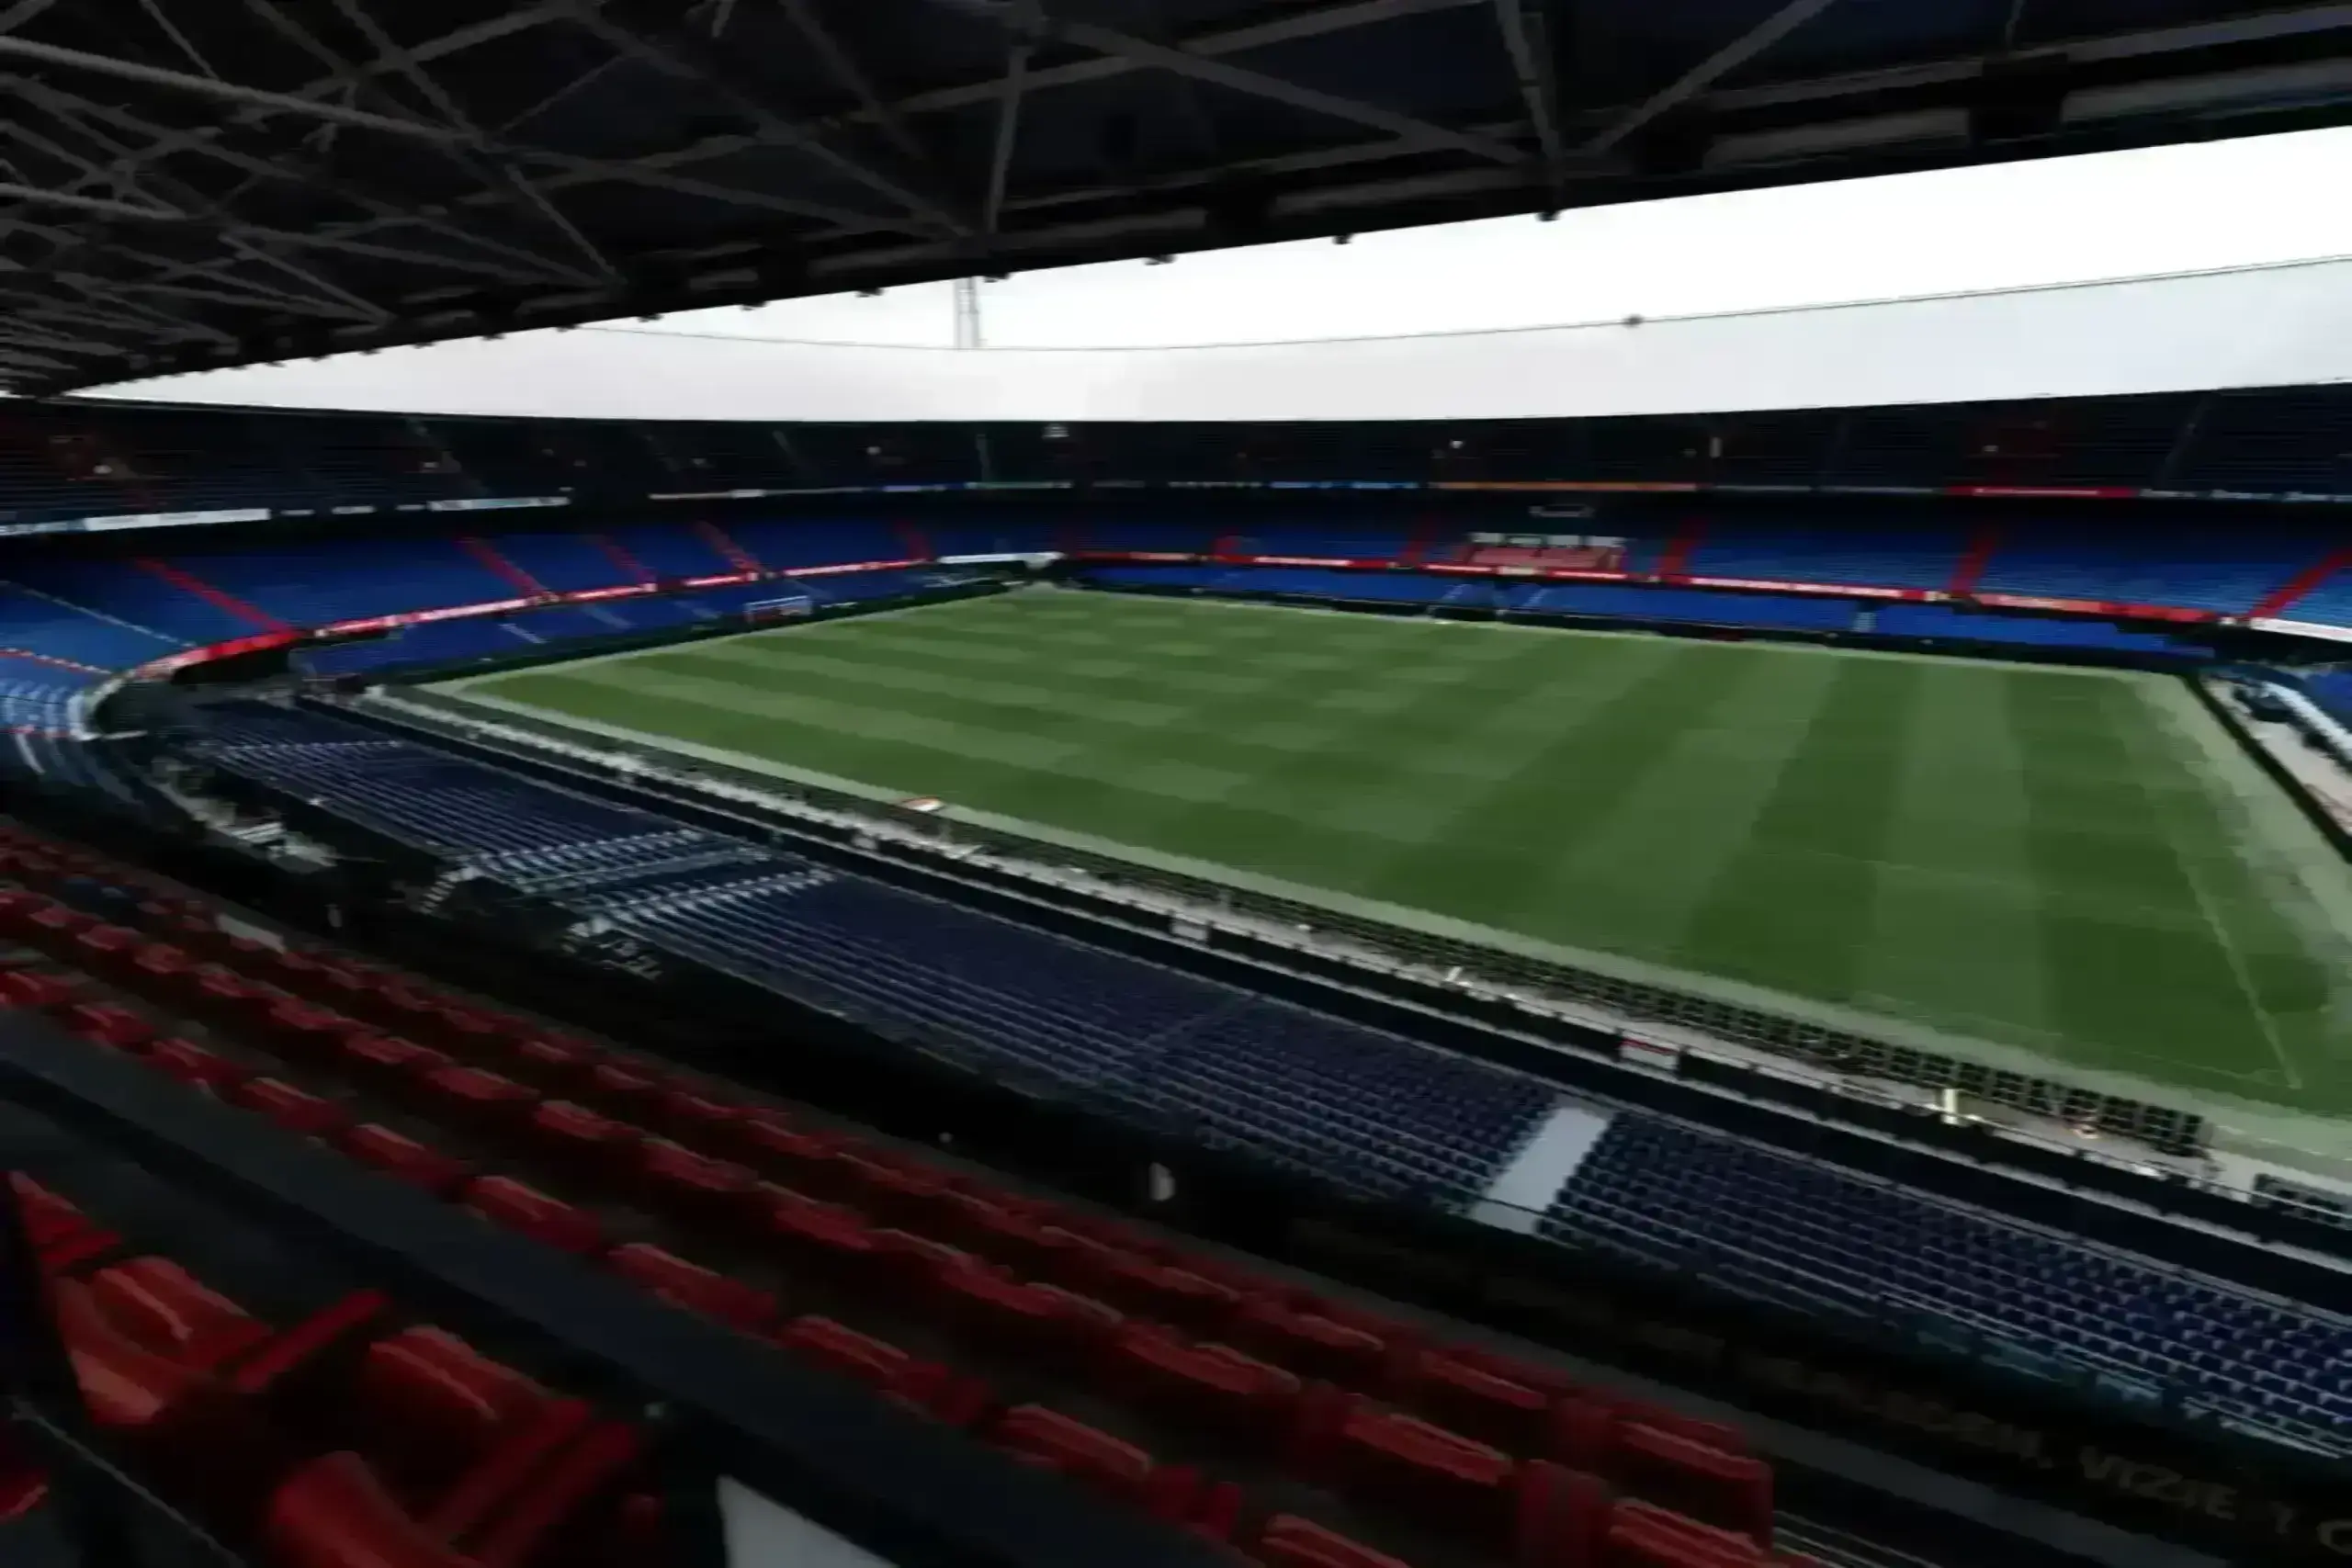 Energy Floors at De Kuip Soccer Stadium Rotterdam